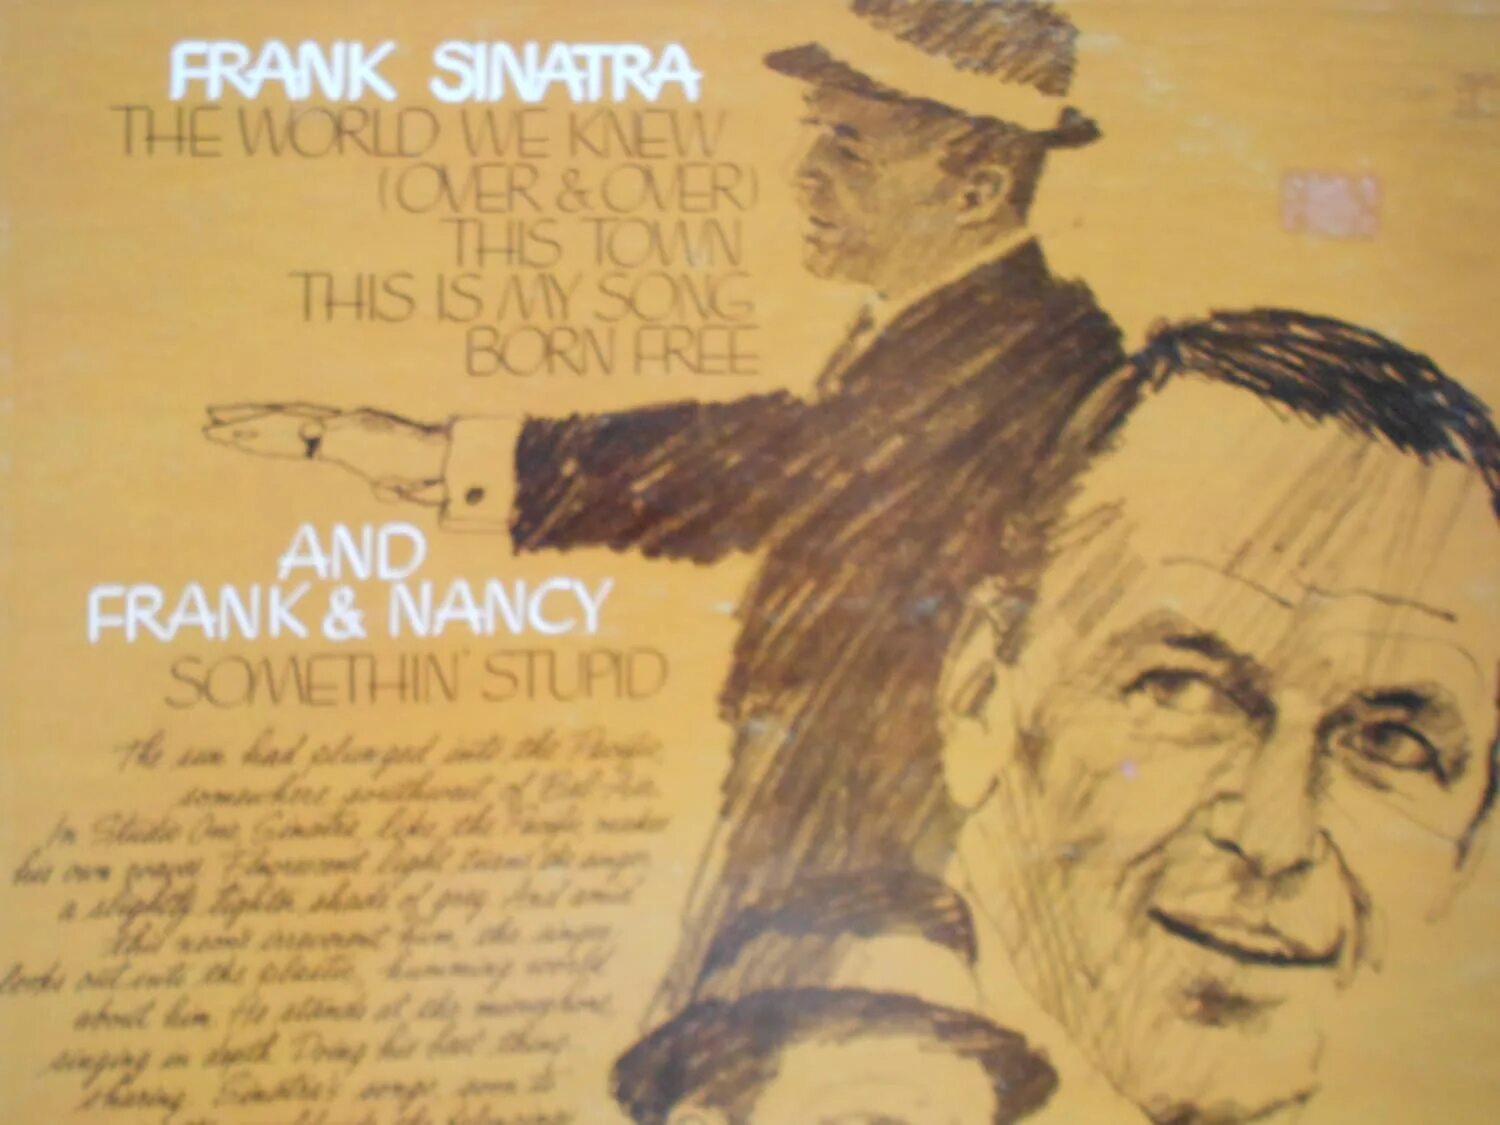 Frank Sinatra - the World we knew. Frank Sinatra the World we knew пластинка. The World we knew Frank Sinatra обложка. Frank Sinatra - the World we knew (1967) Ноты.